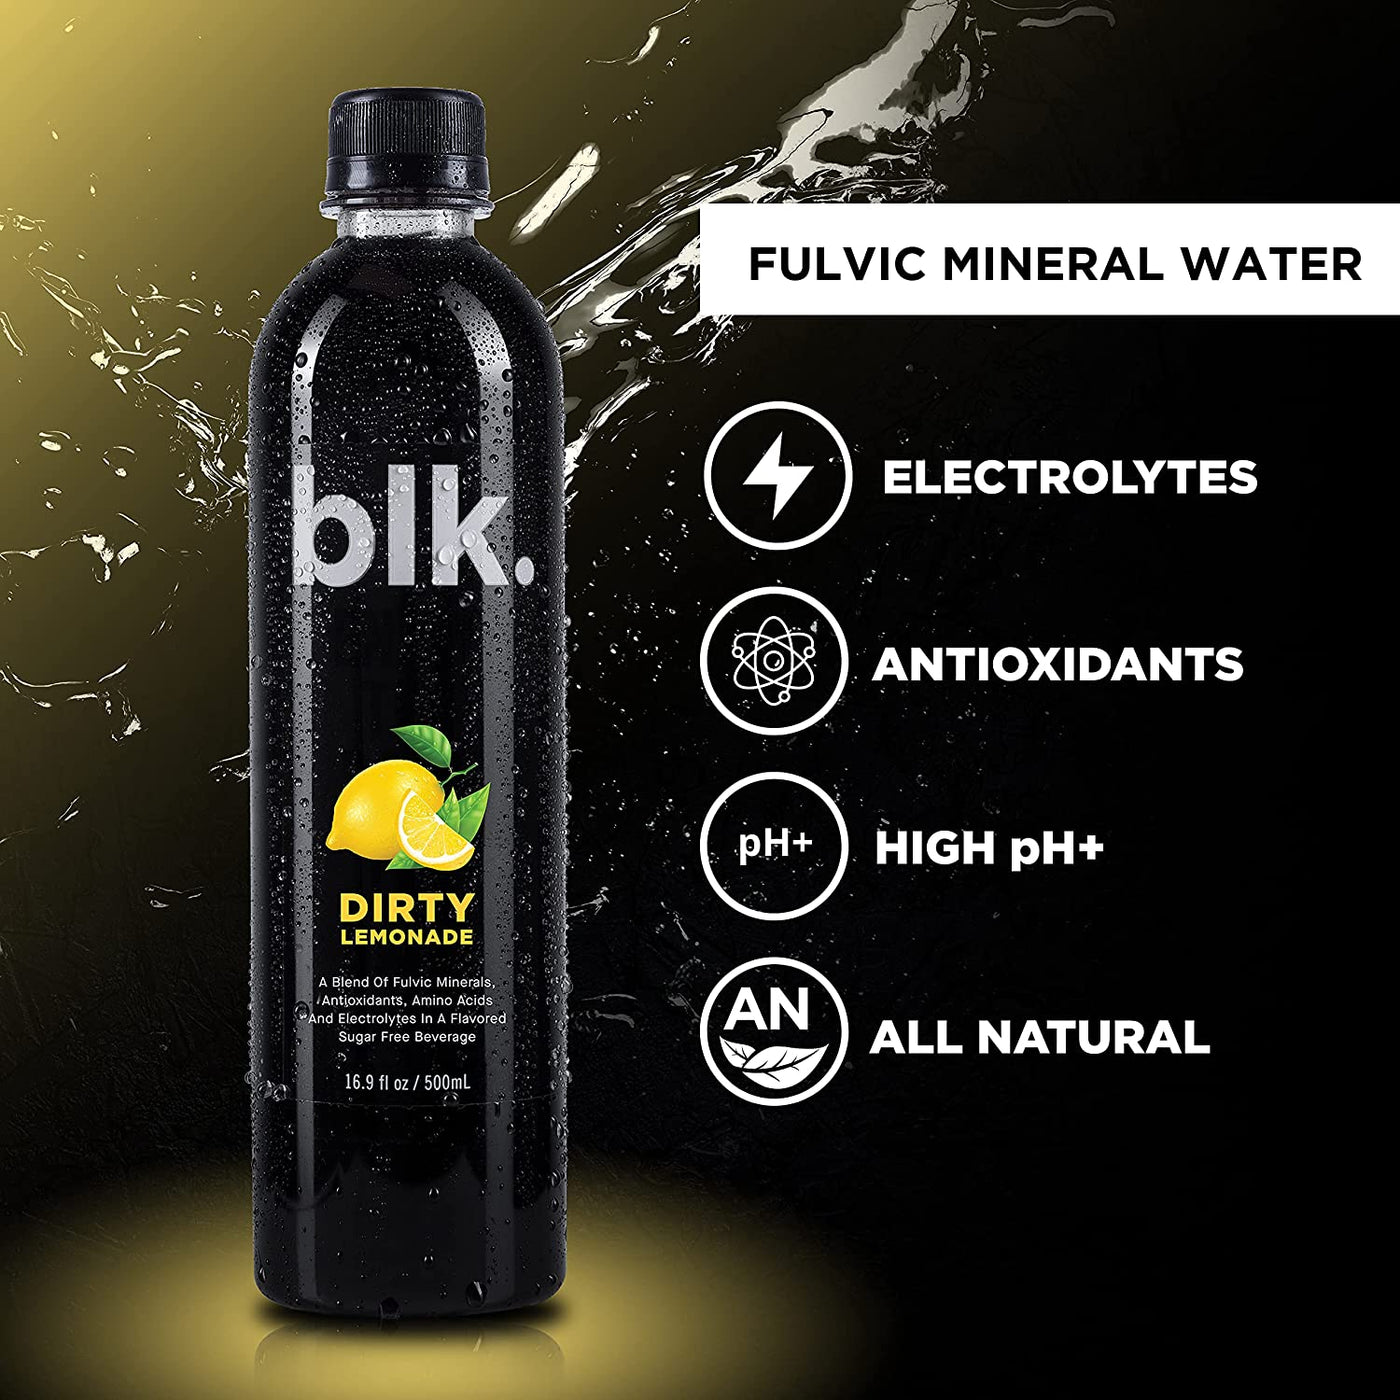 blk water dirty lemonade fulvic mineral water with electrolytes, antioxidants, high pH, all natural